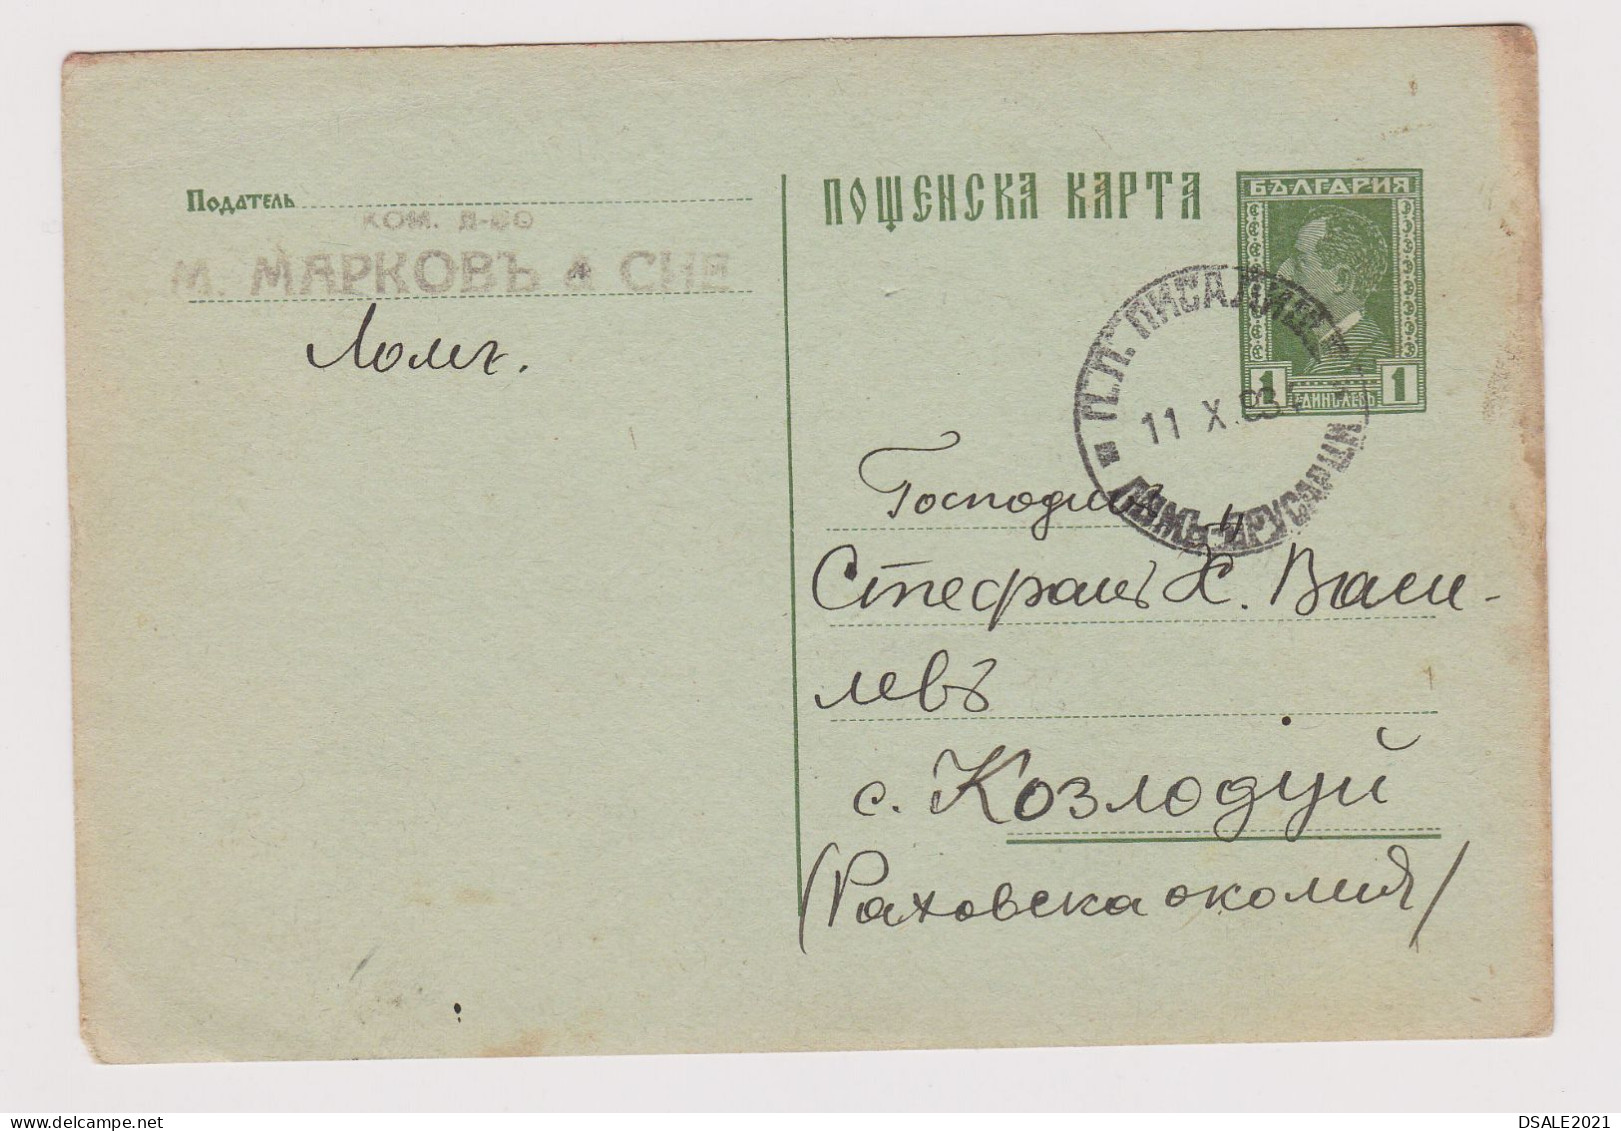 Bulgaria Bulgarie Bulgarian Postal Stationery Card, 1934 Sent Via Railway TPO Zug Bahnpost (LOM-BRUSARTZI) (575) - Postcards